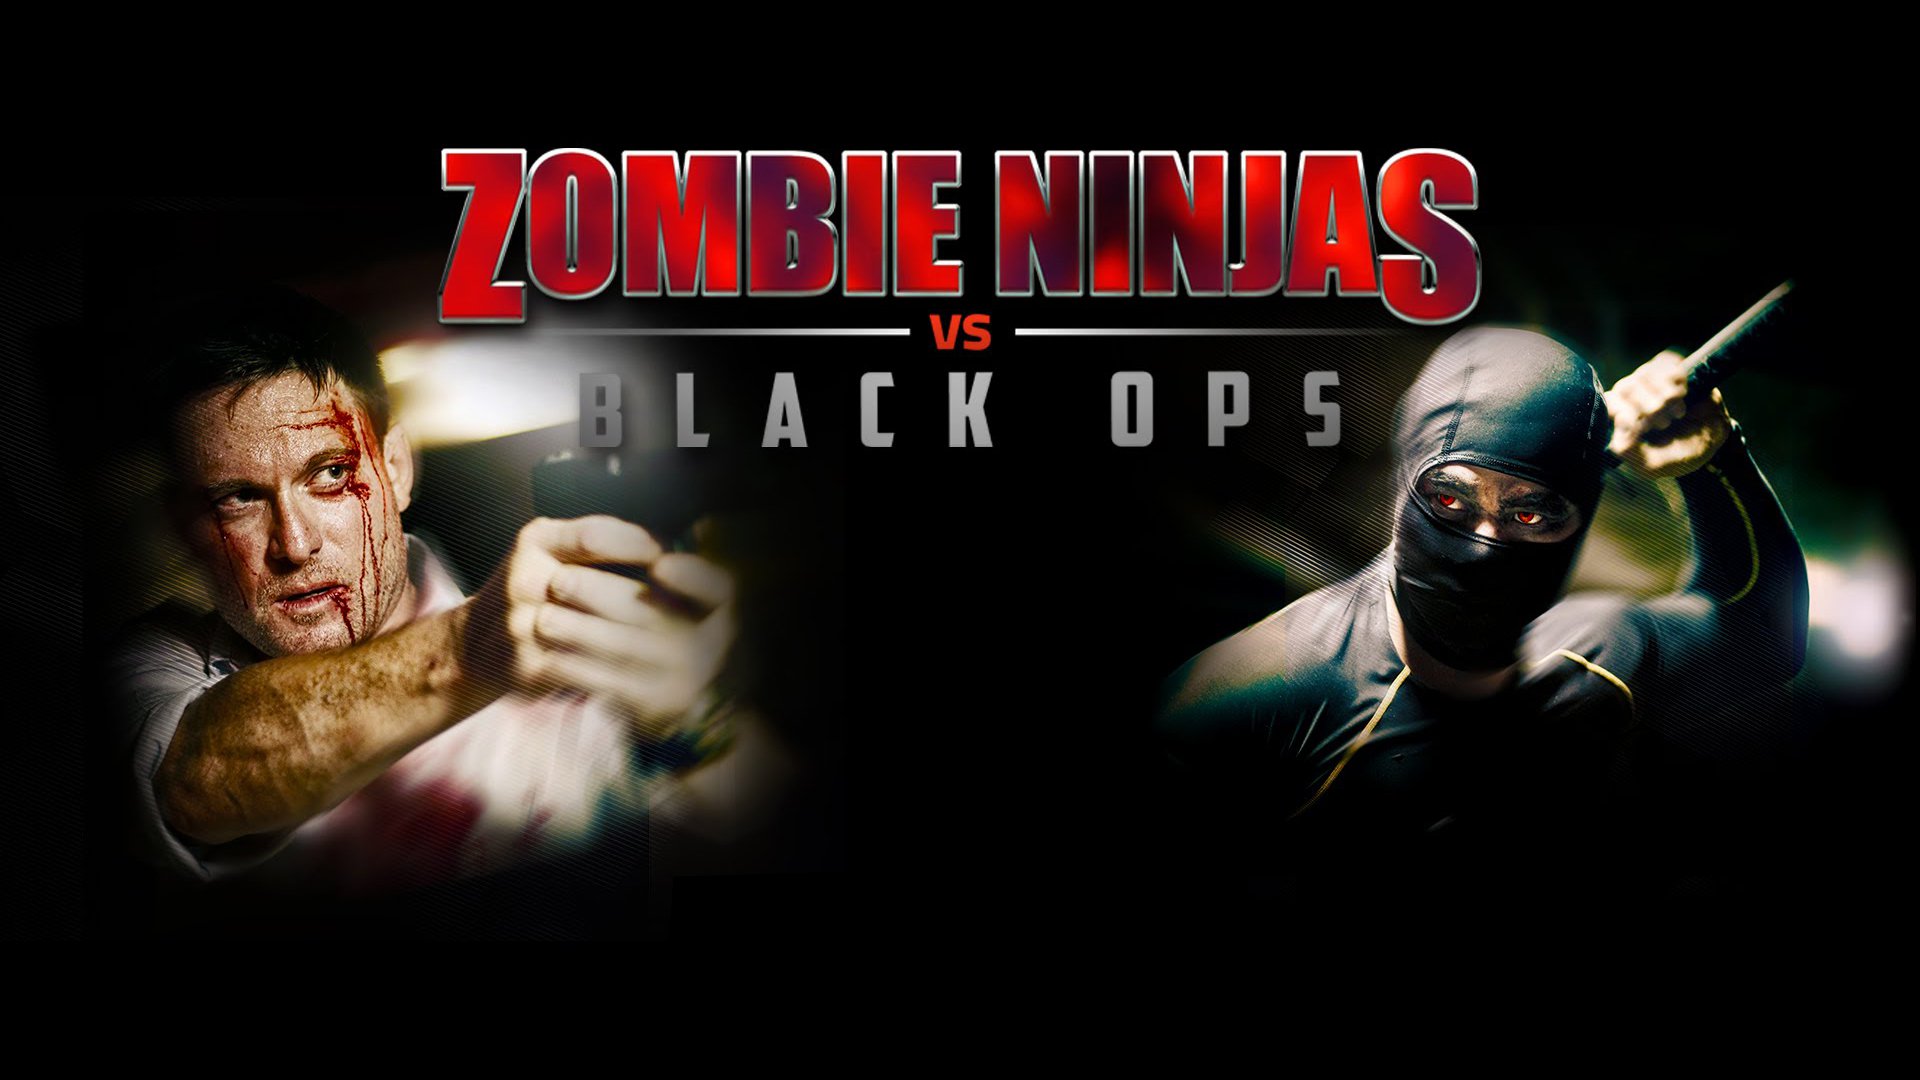 Movie Zombie Ninjas vs Black Ops HD Wallpaper | Background Image